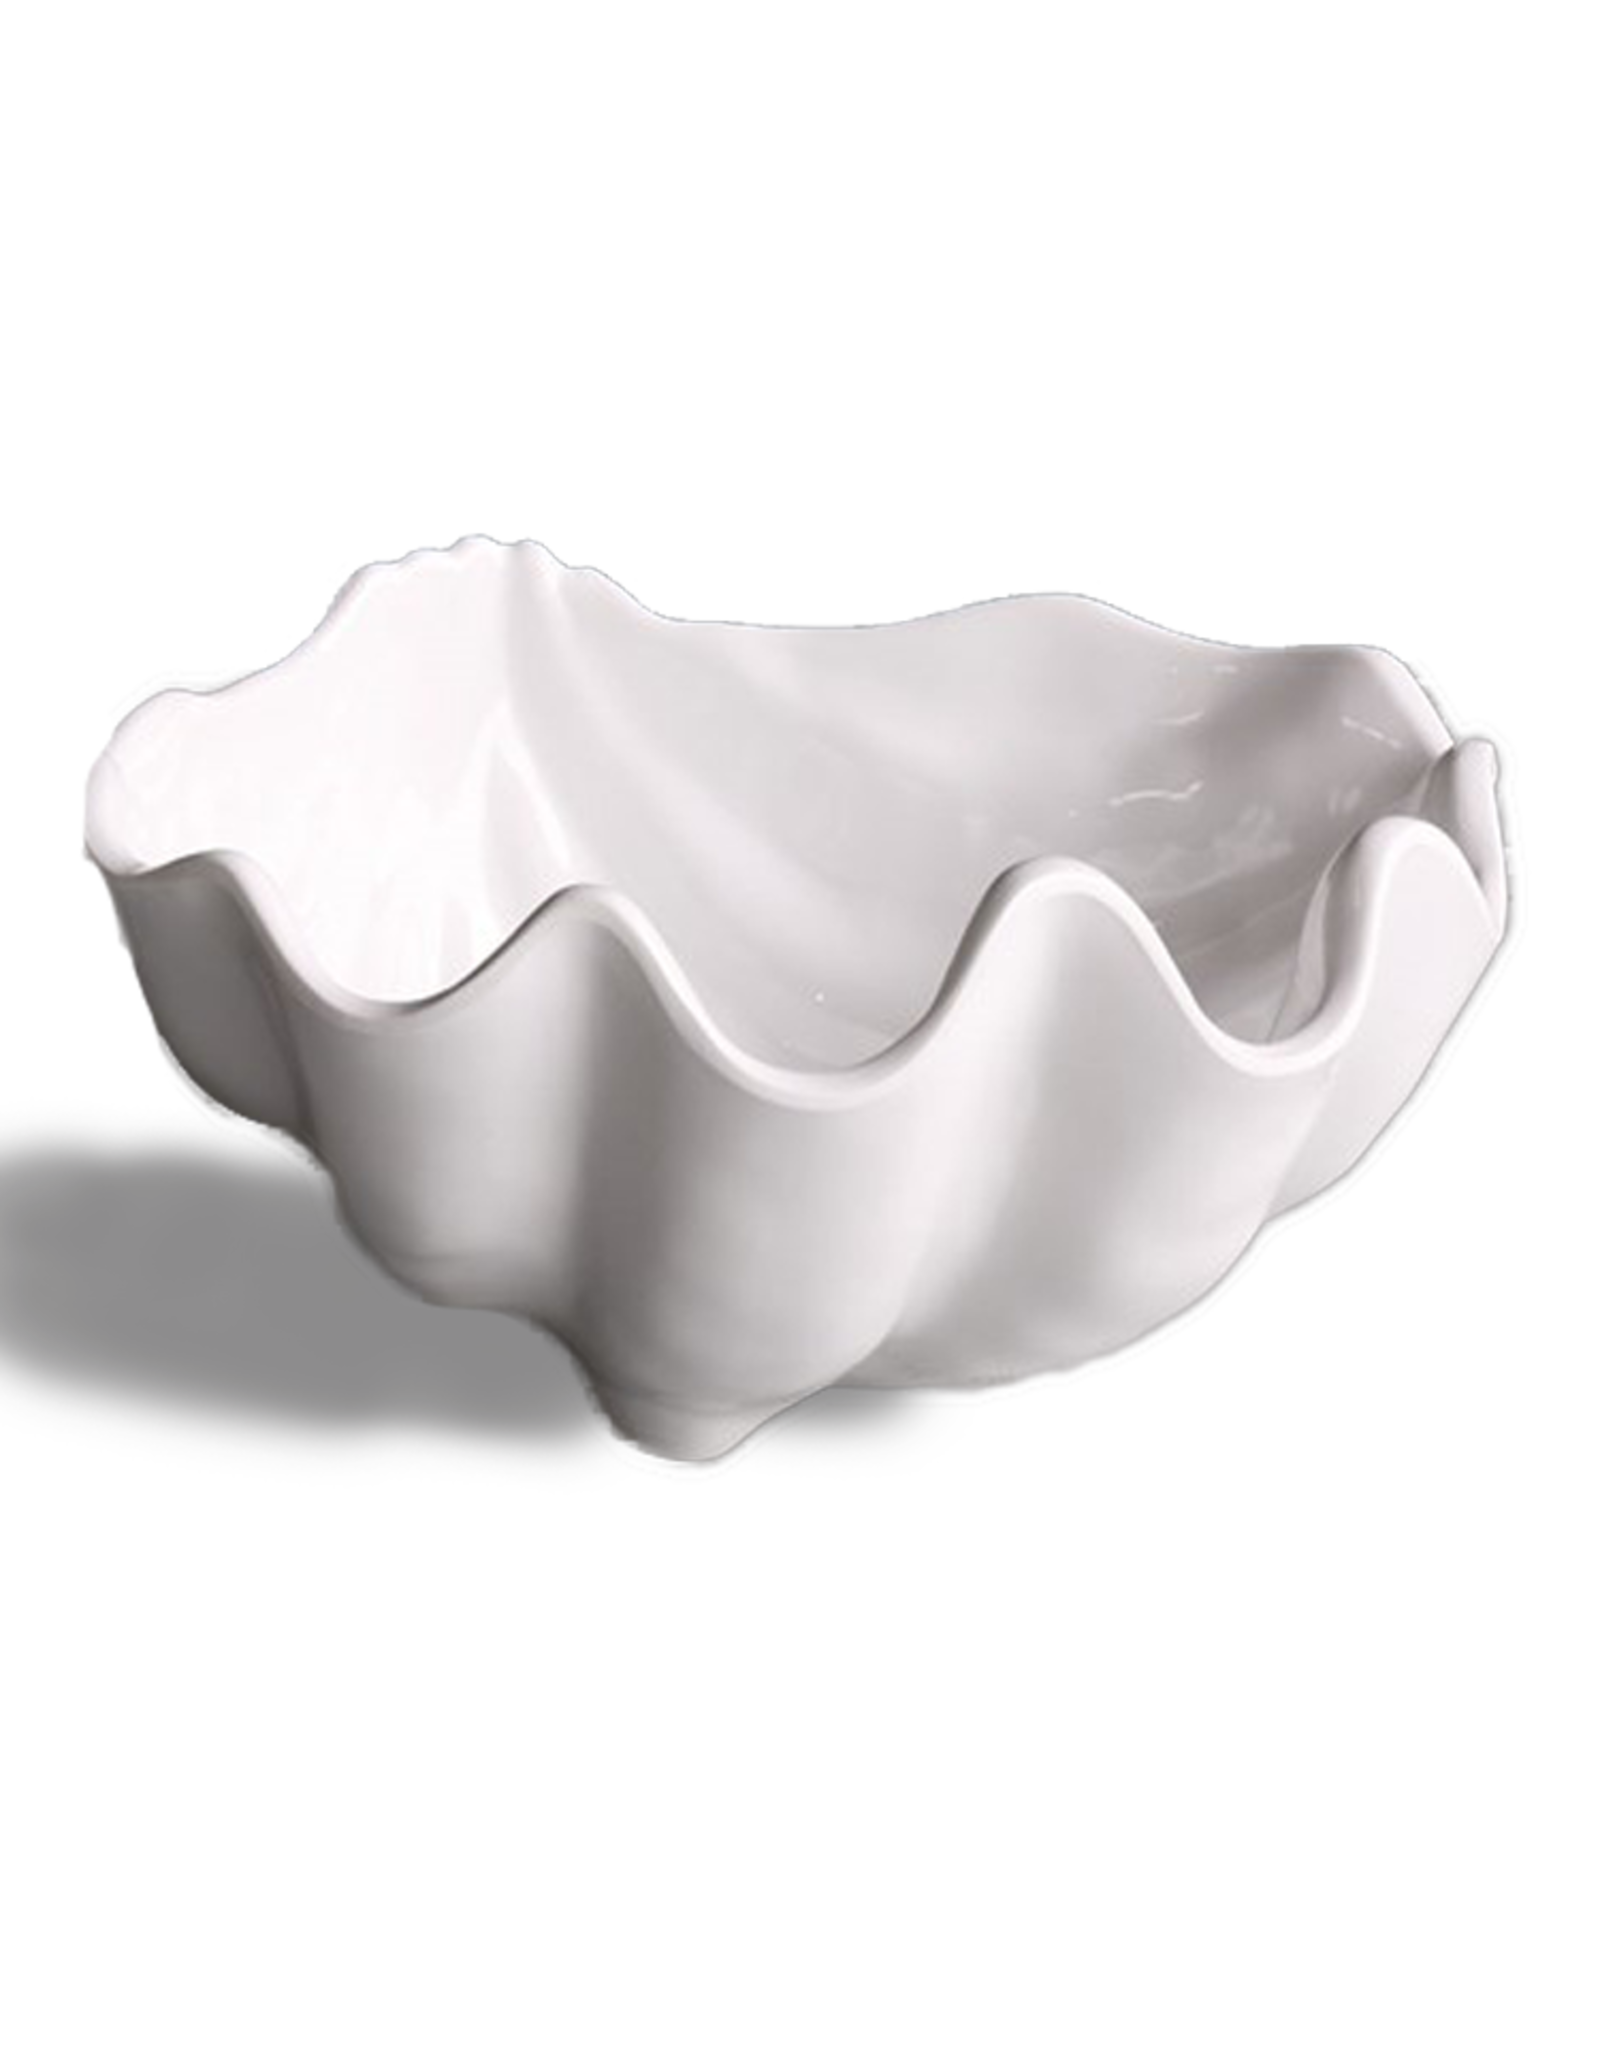 Beatriz Ball VIDA Ocean Clam Shell Small Melamine Bowl in White